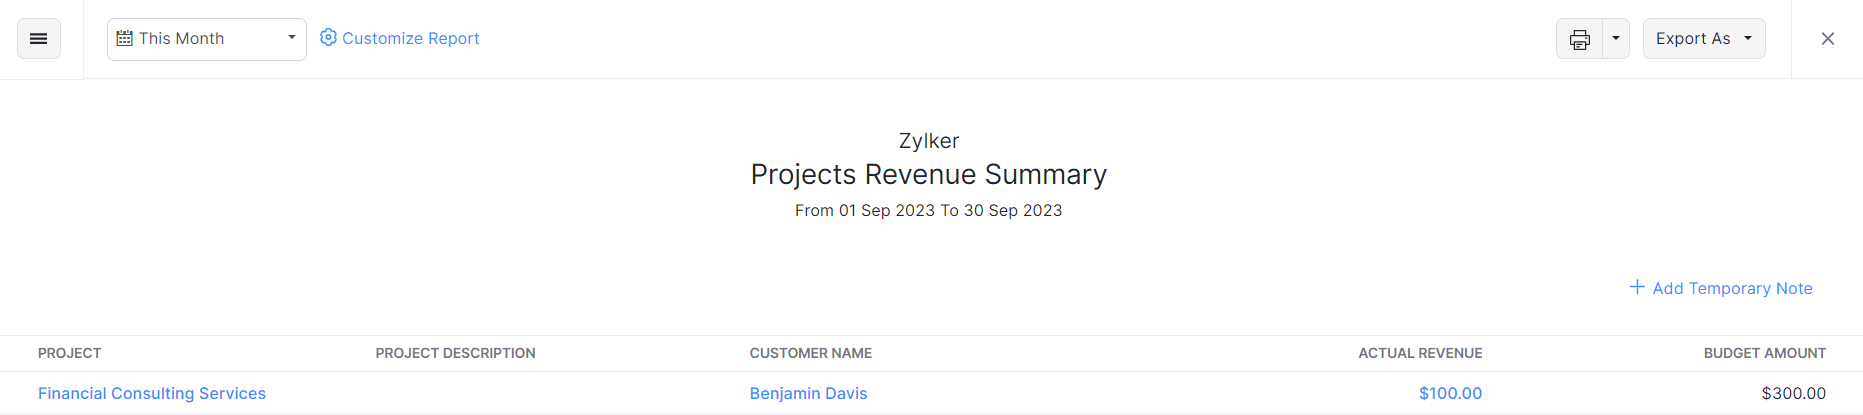 Project Revenue Summary Report